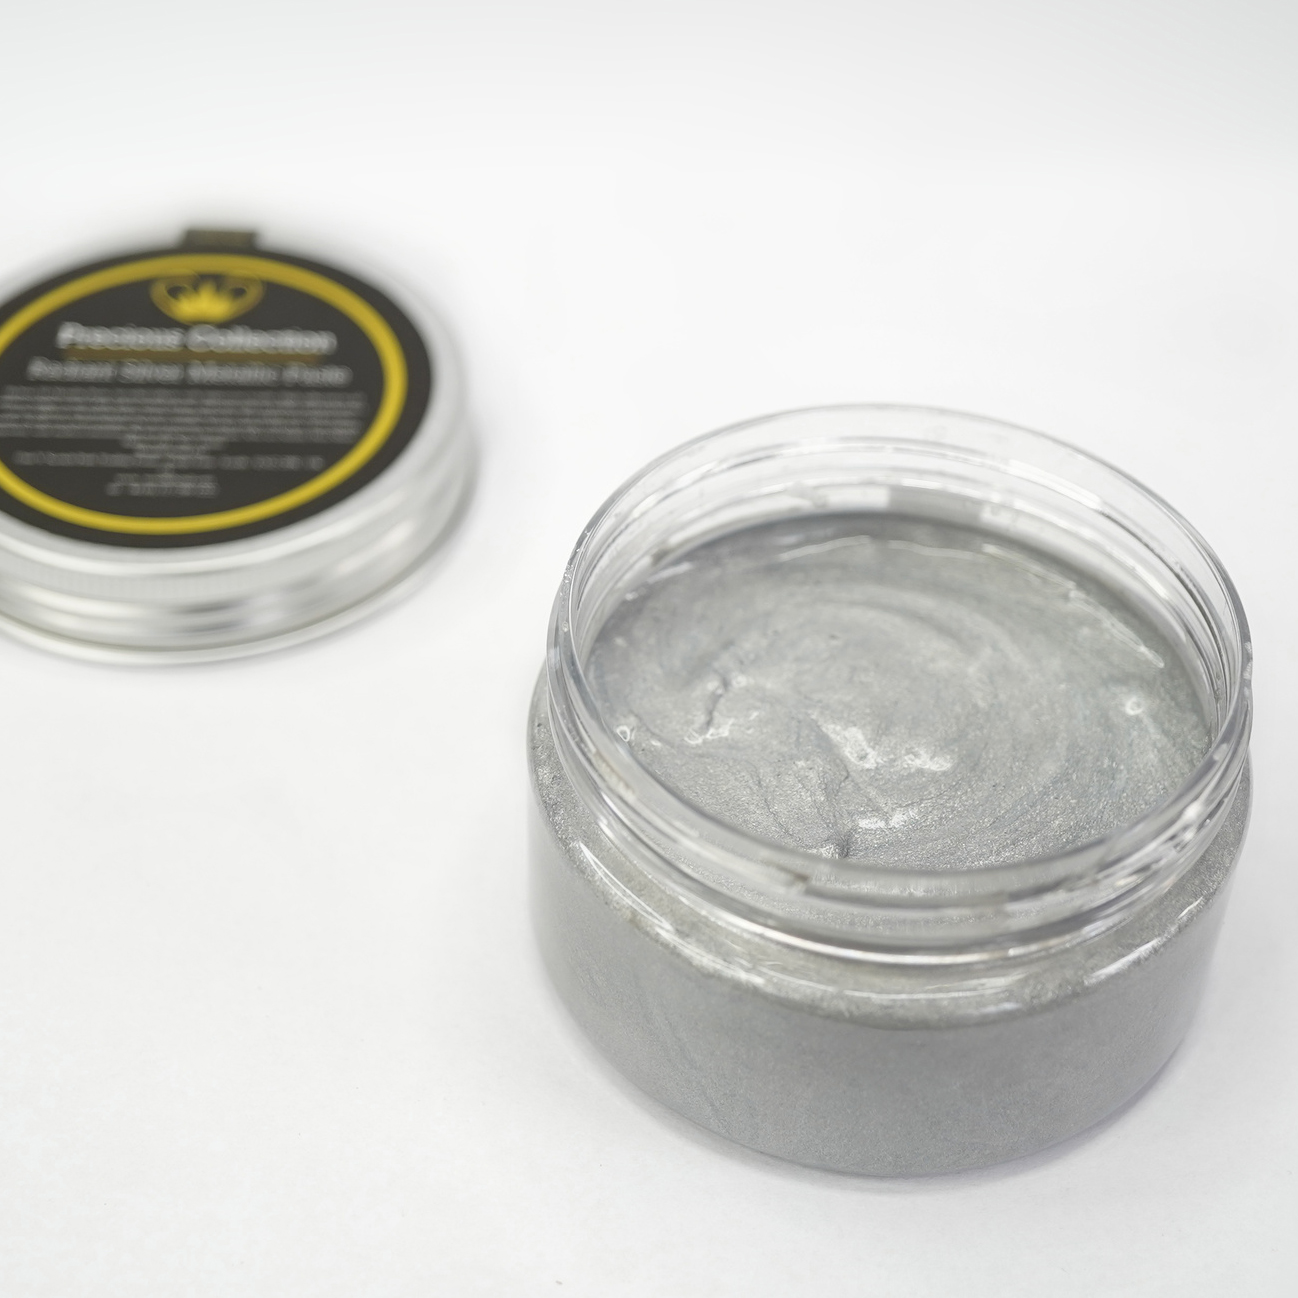 EMBOSSINGPASRA - Posh Chalk Precious Metallic Paste - RADIANT SILVER